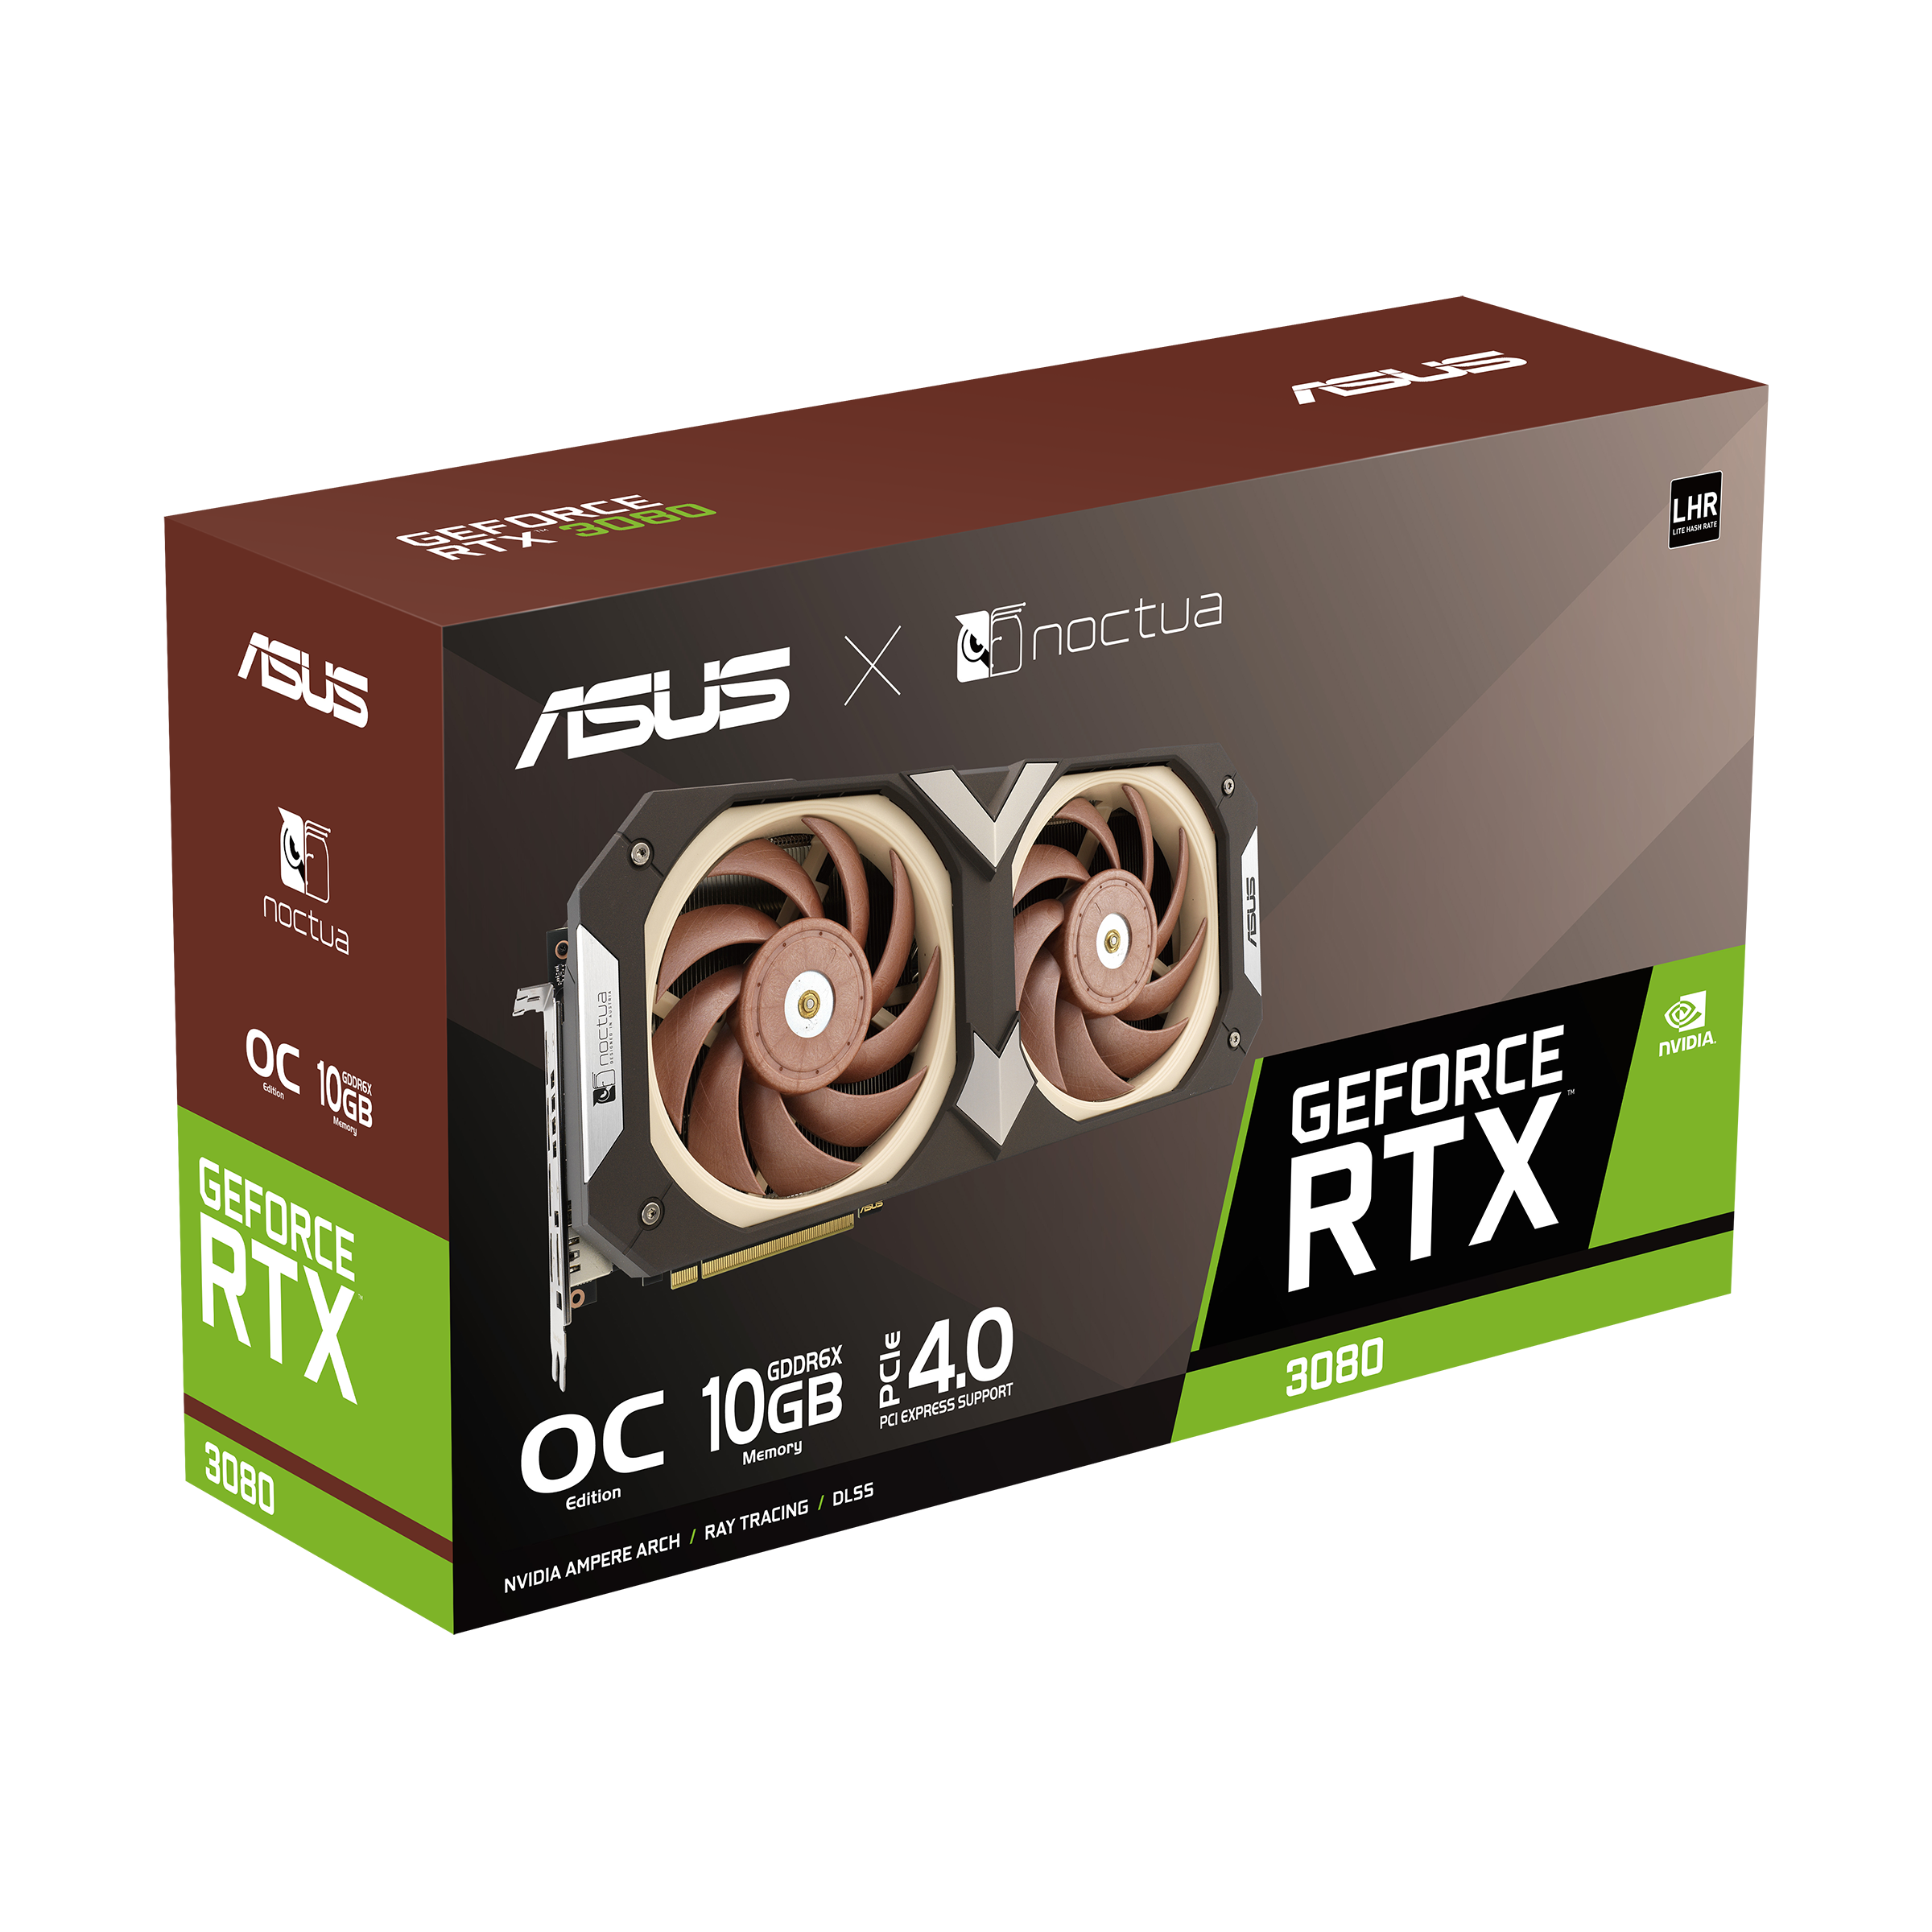 ASUS GeForce RTX 3080 Noctua OC Edition | Graphics Card | ASUS Global